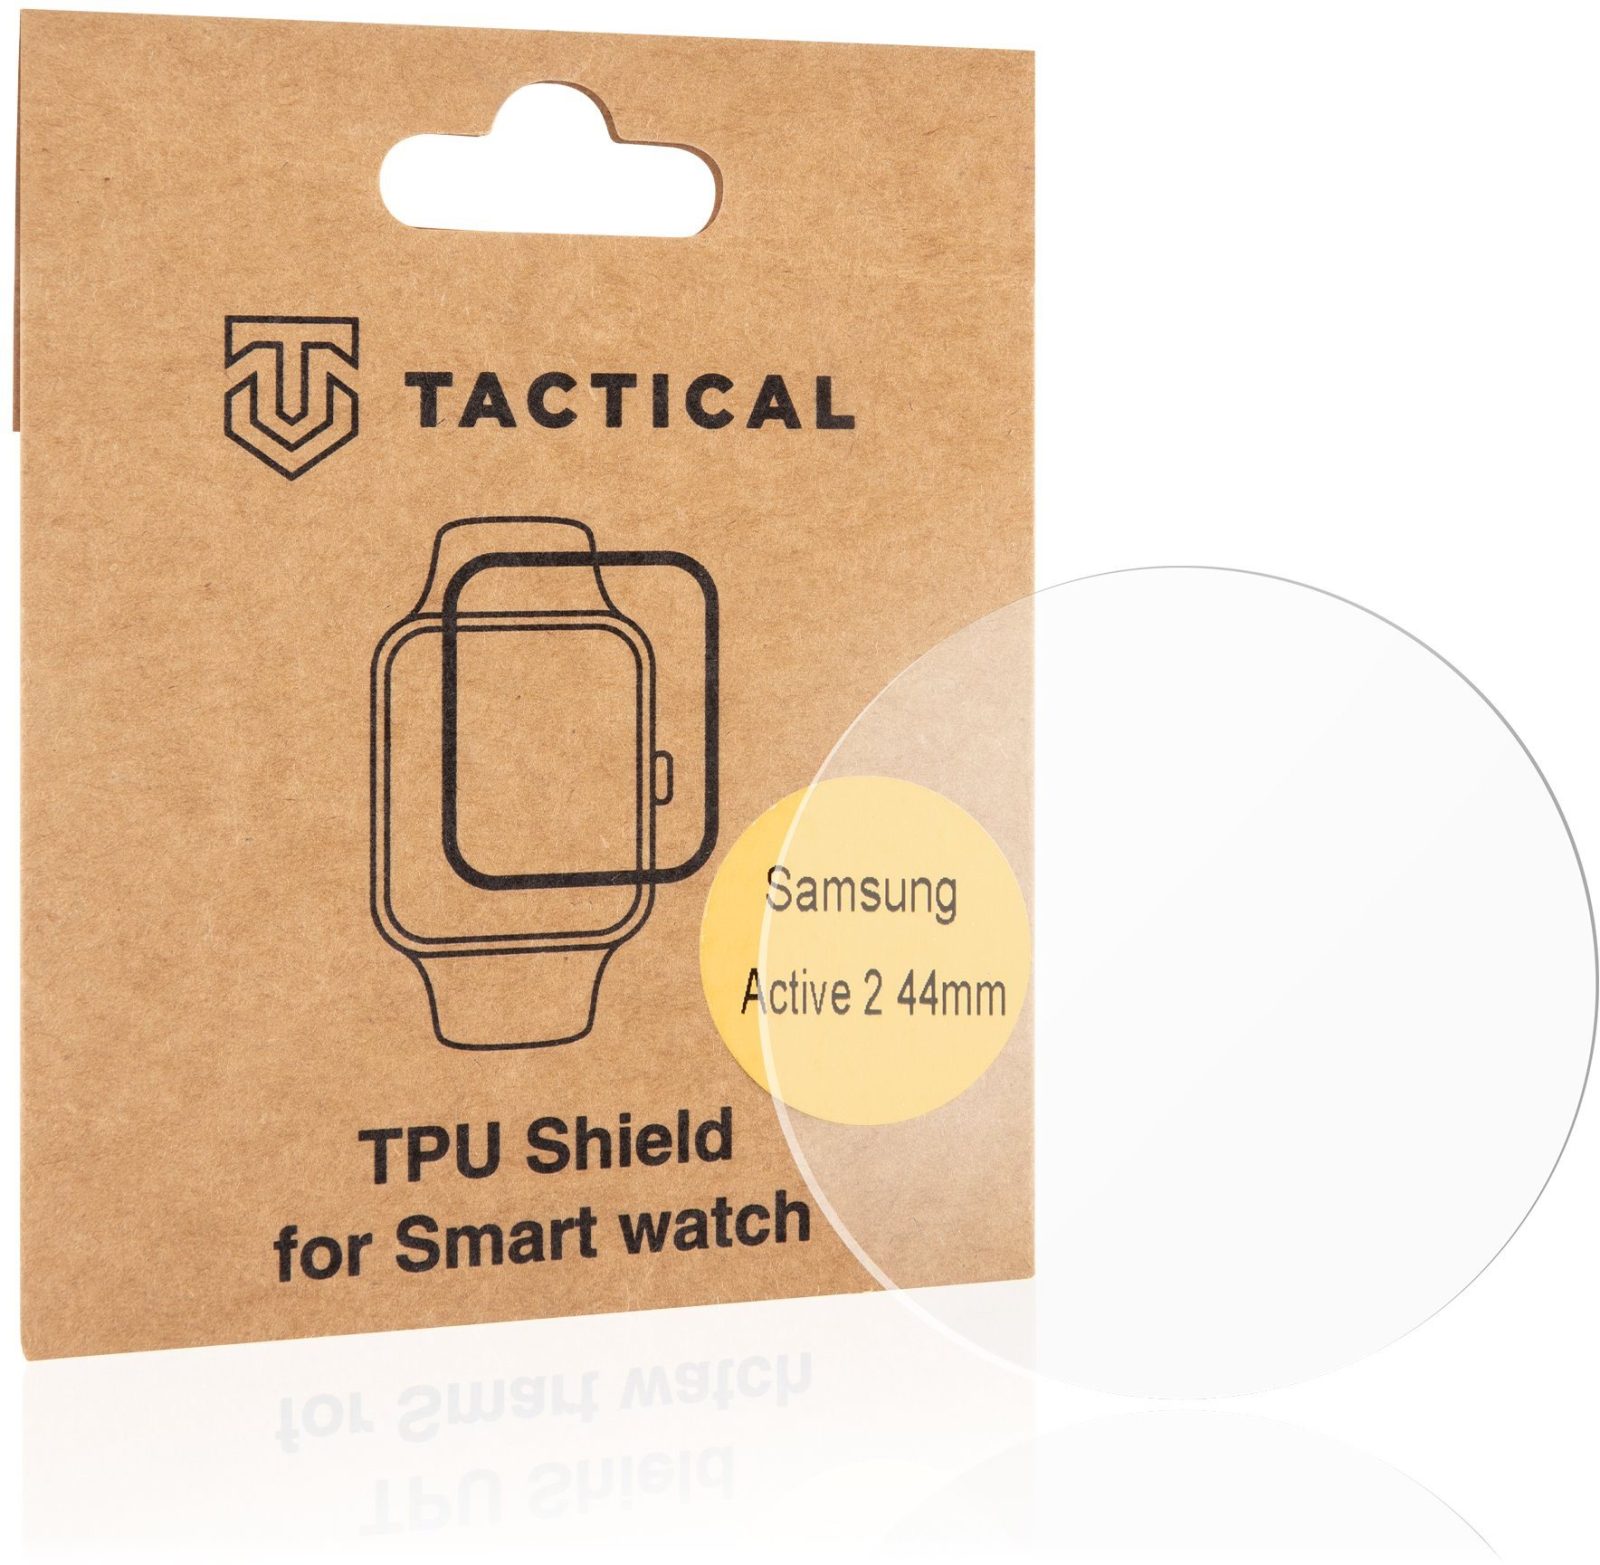 Védőfólia Tactical TPU Shield fólia a Samsung Active 2 44mm-hez